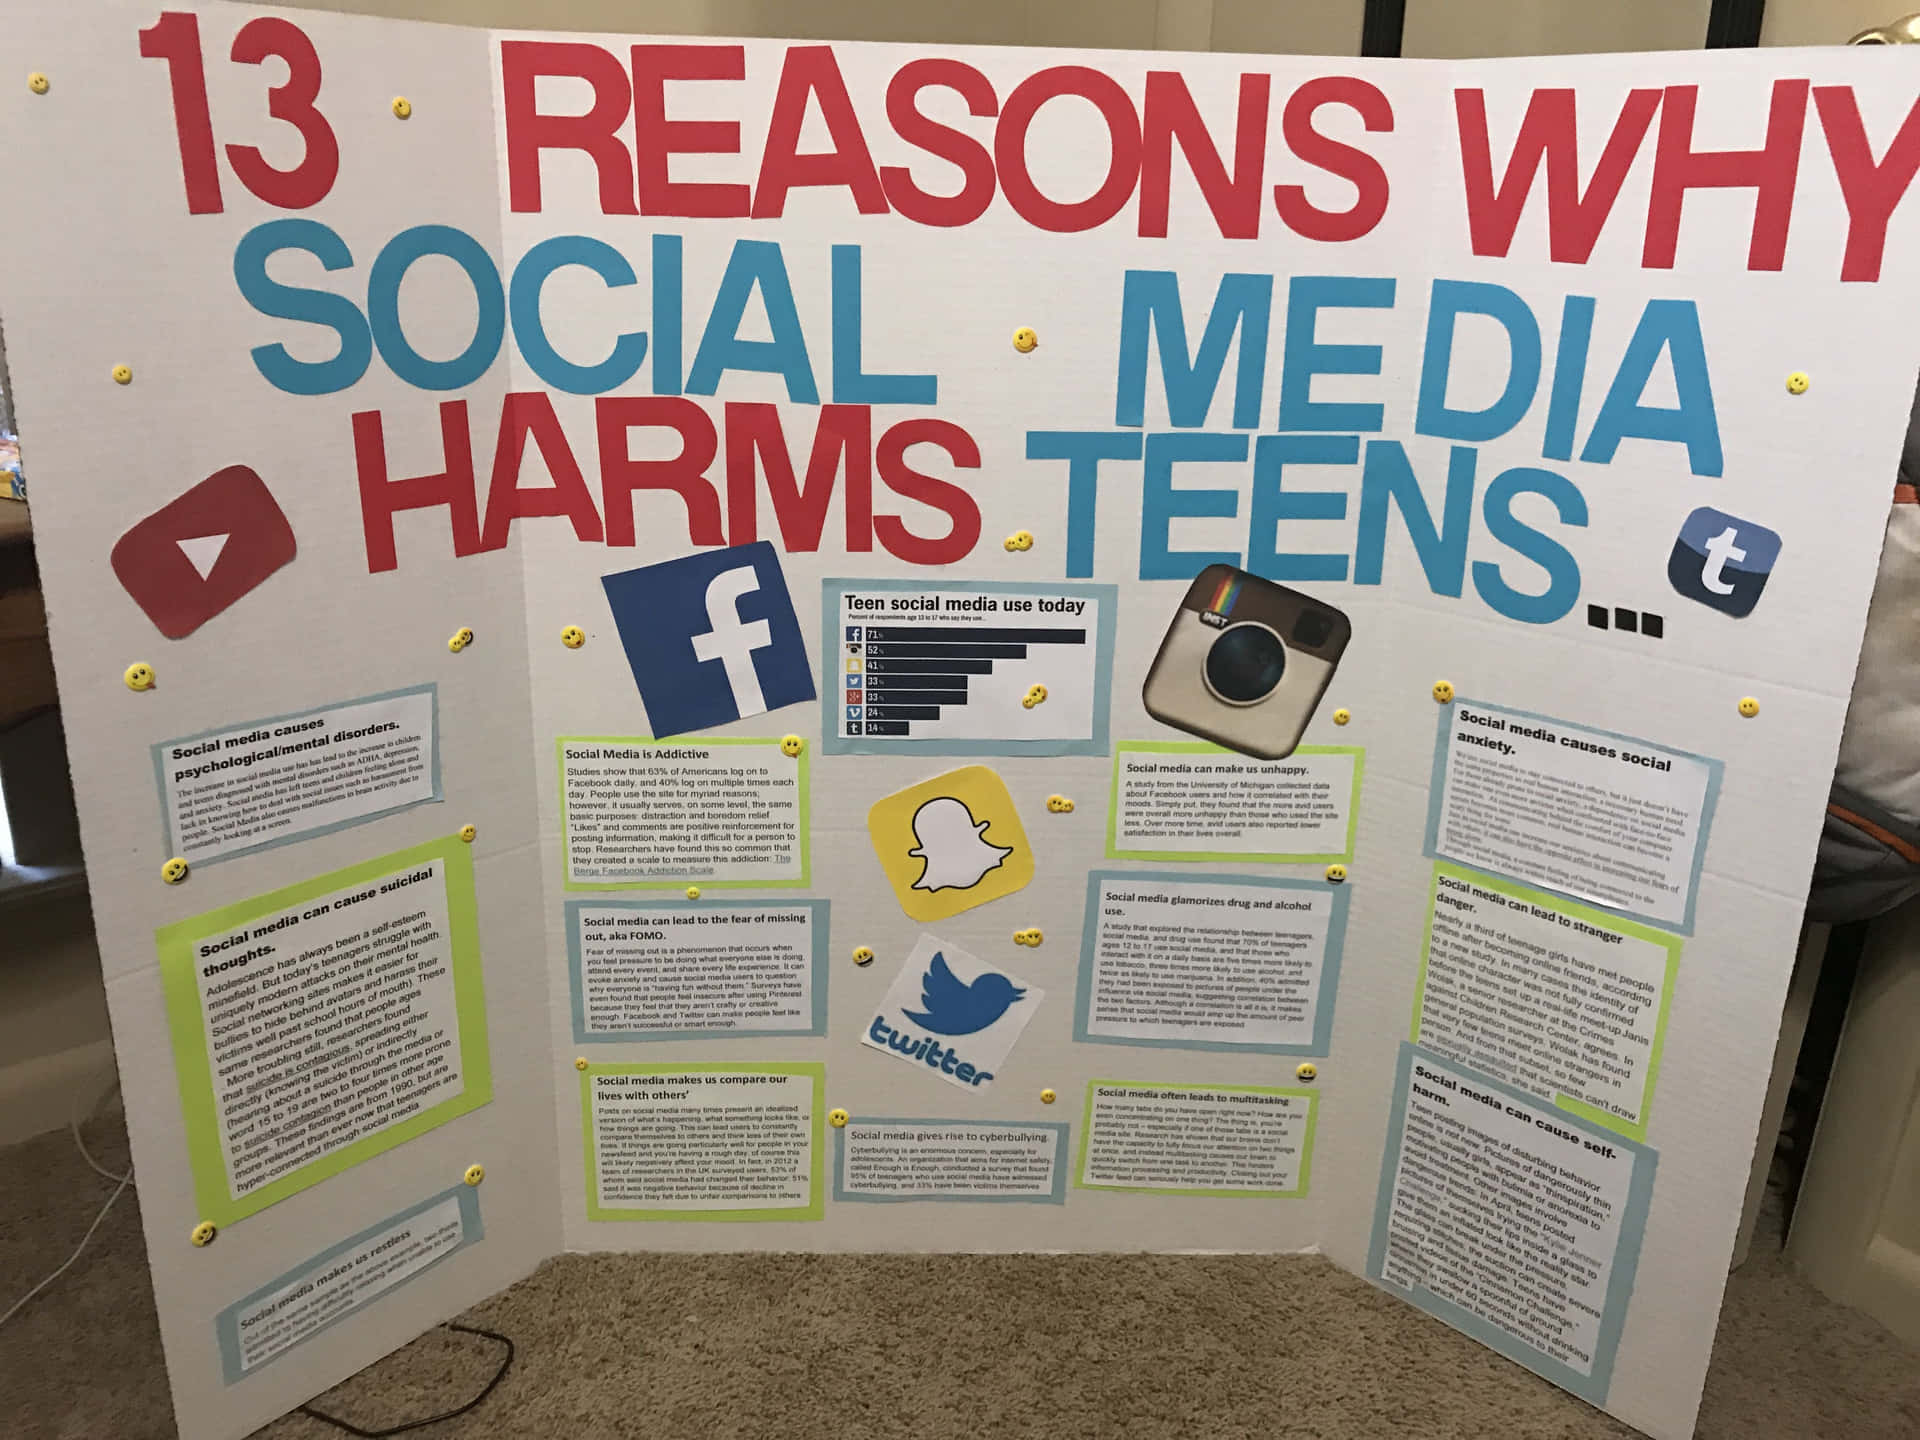 13 Reasons Why Social Media Harms Teens